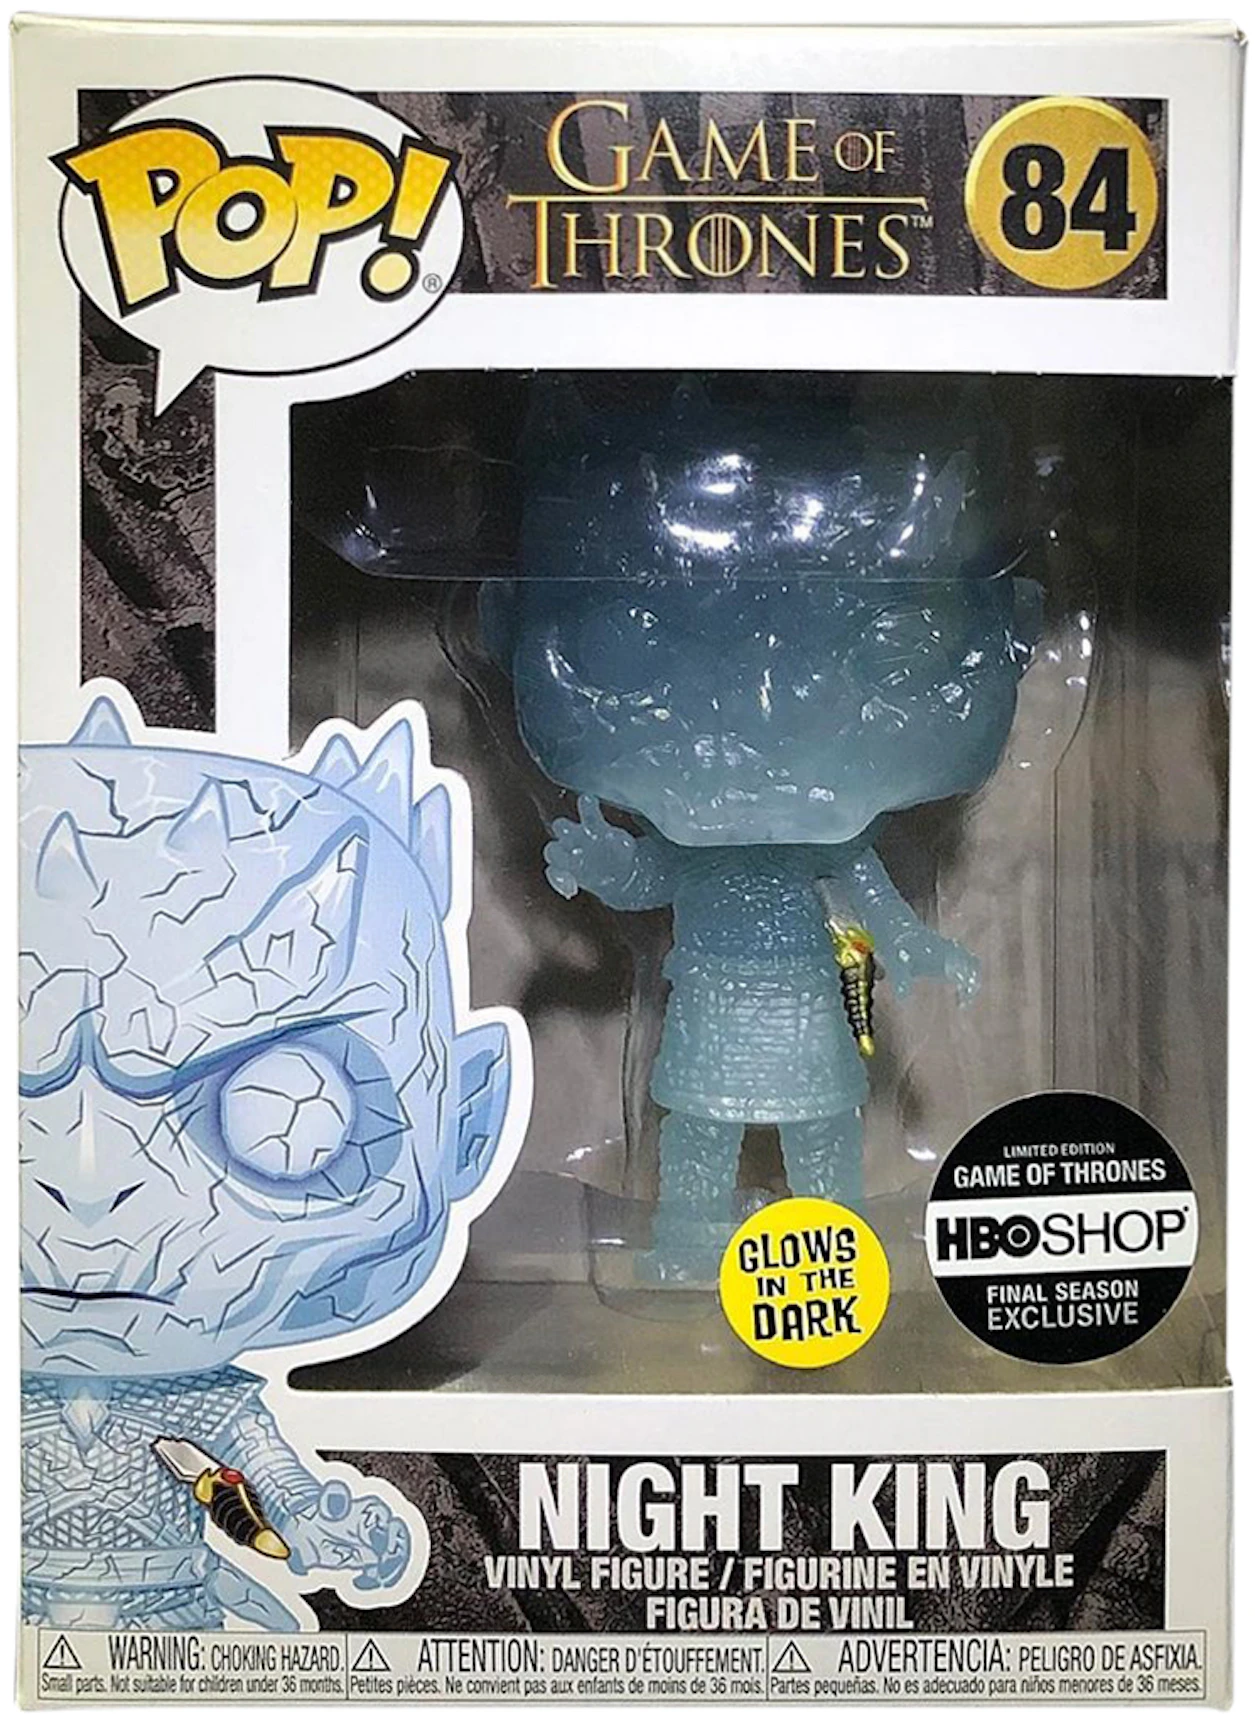 Deseo Desaparecer Descodificar Funko Pop! Game of Thrones Night King (Glow) HBO Shop Exclusive Figure #84  - ES